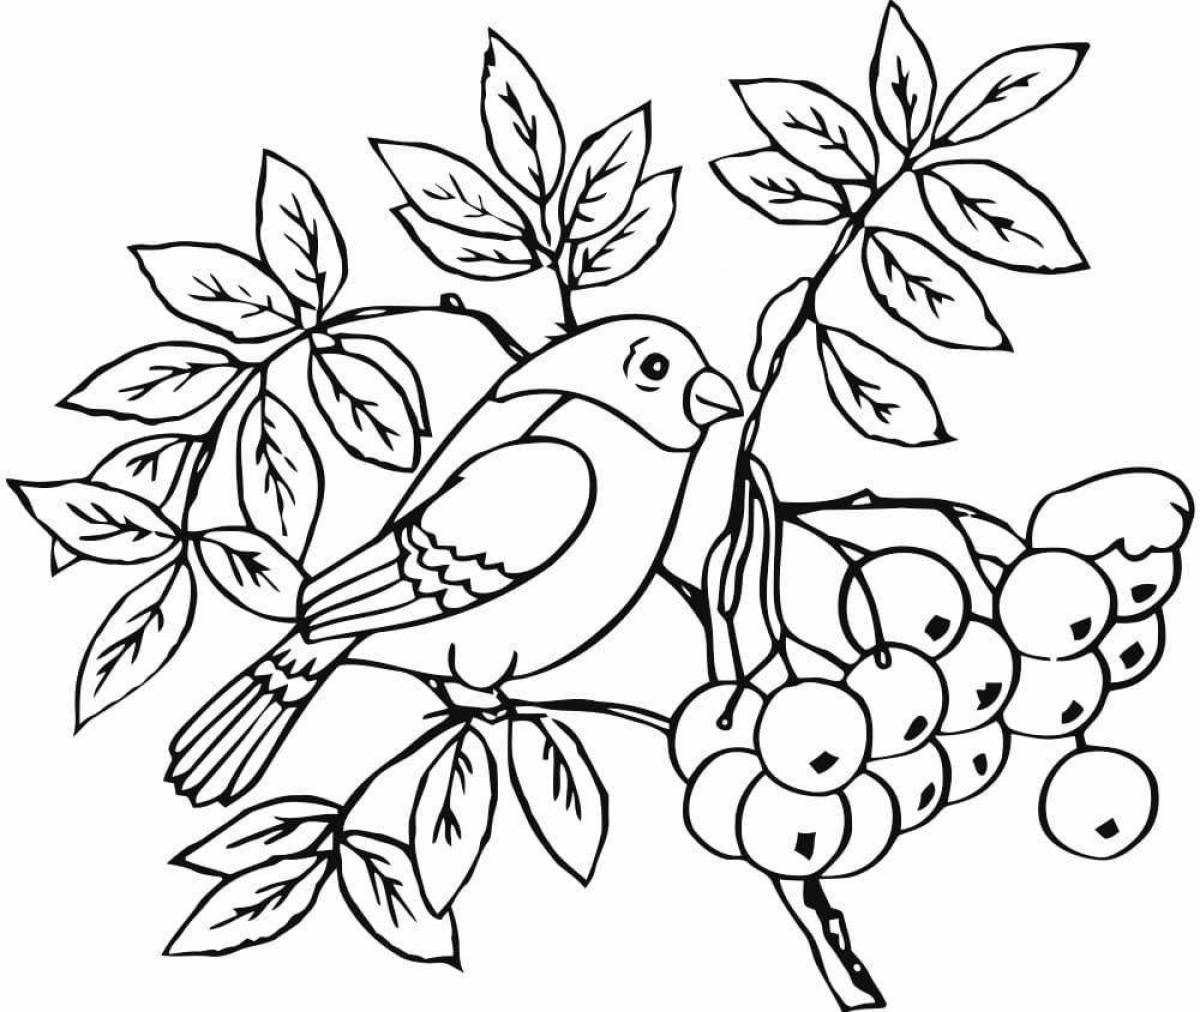 Charming drawing of a bullfinch